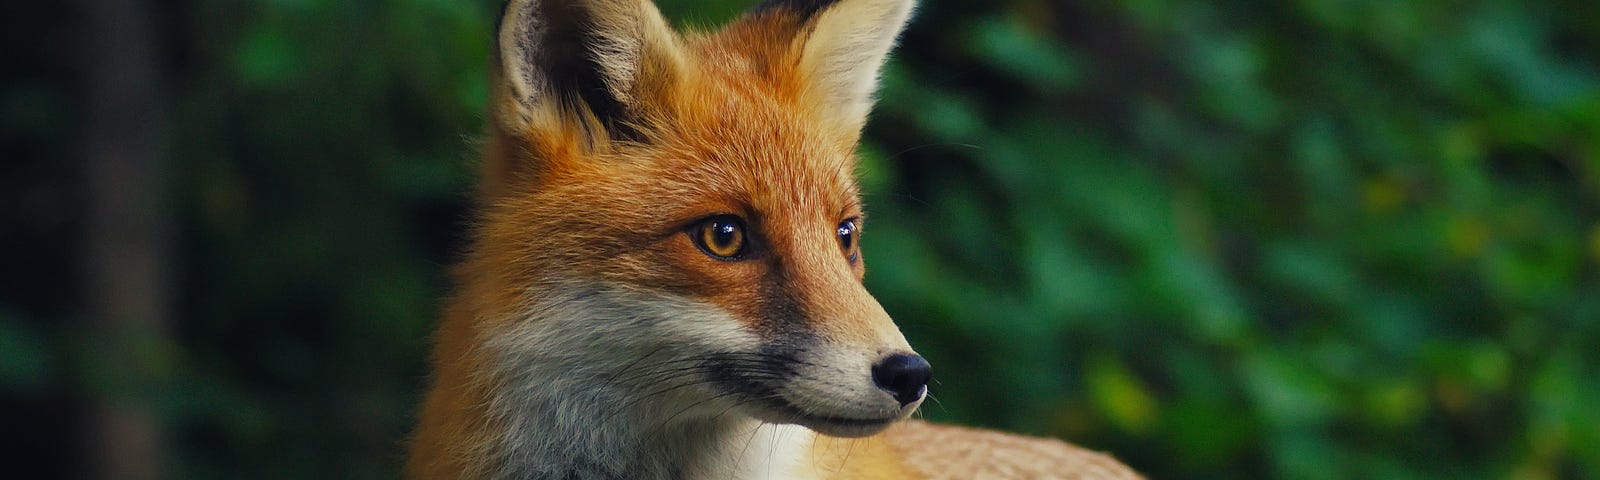 A fox against a green background